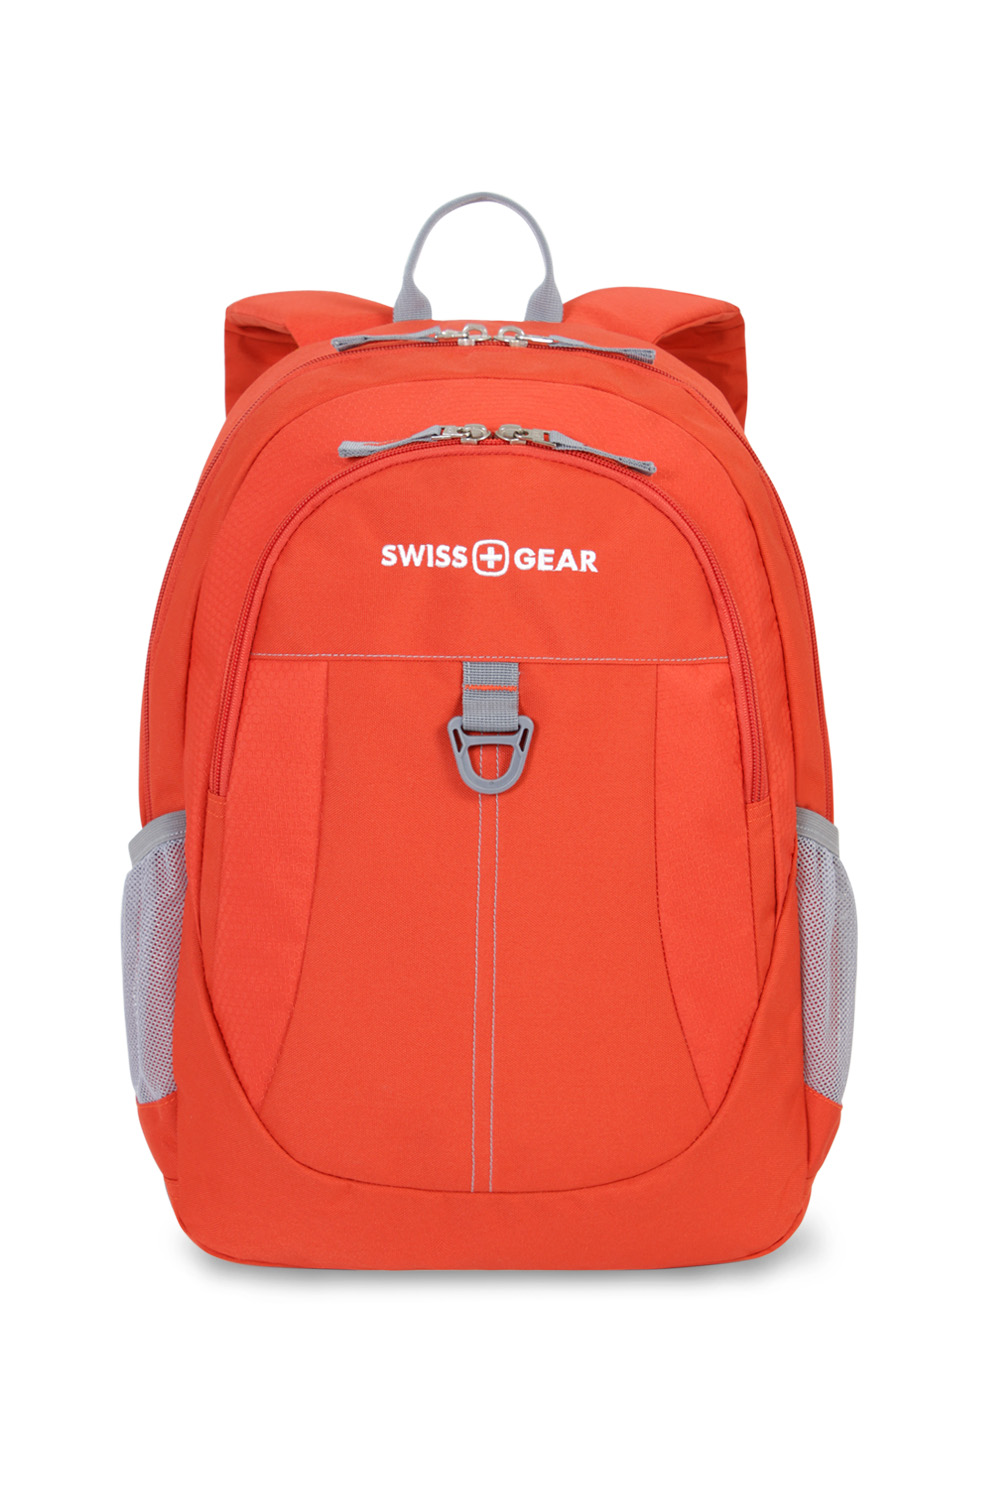 oxybags Women's Backpack Handbag (Orange) : Amazon.in: Fashion